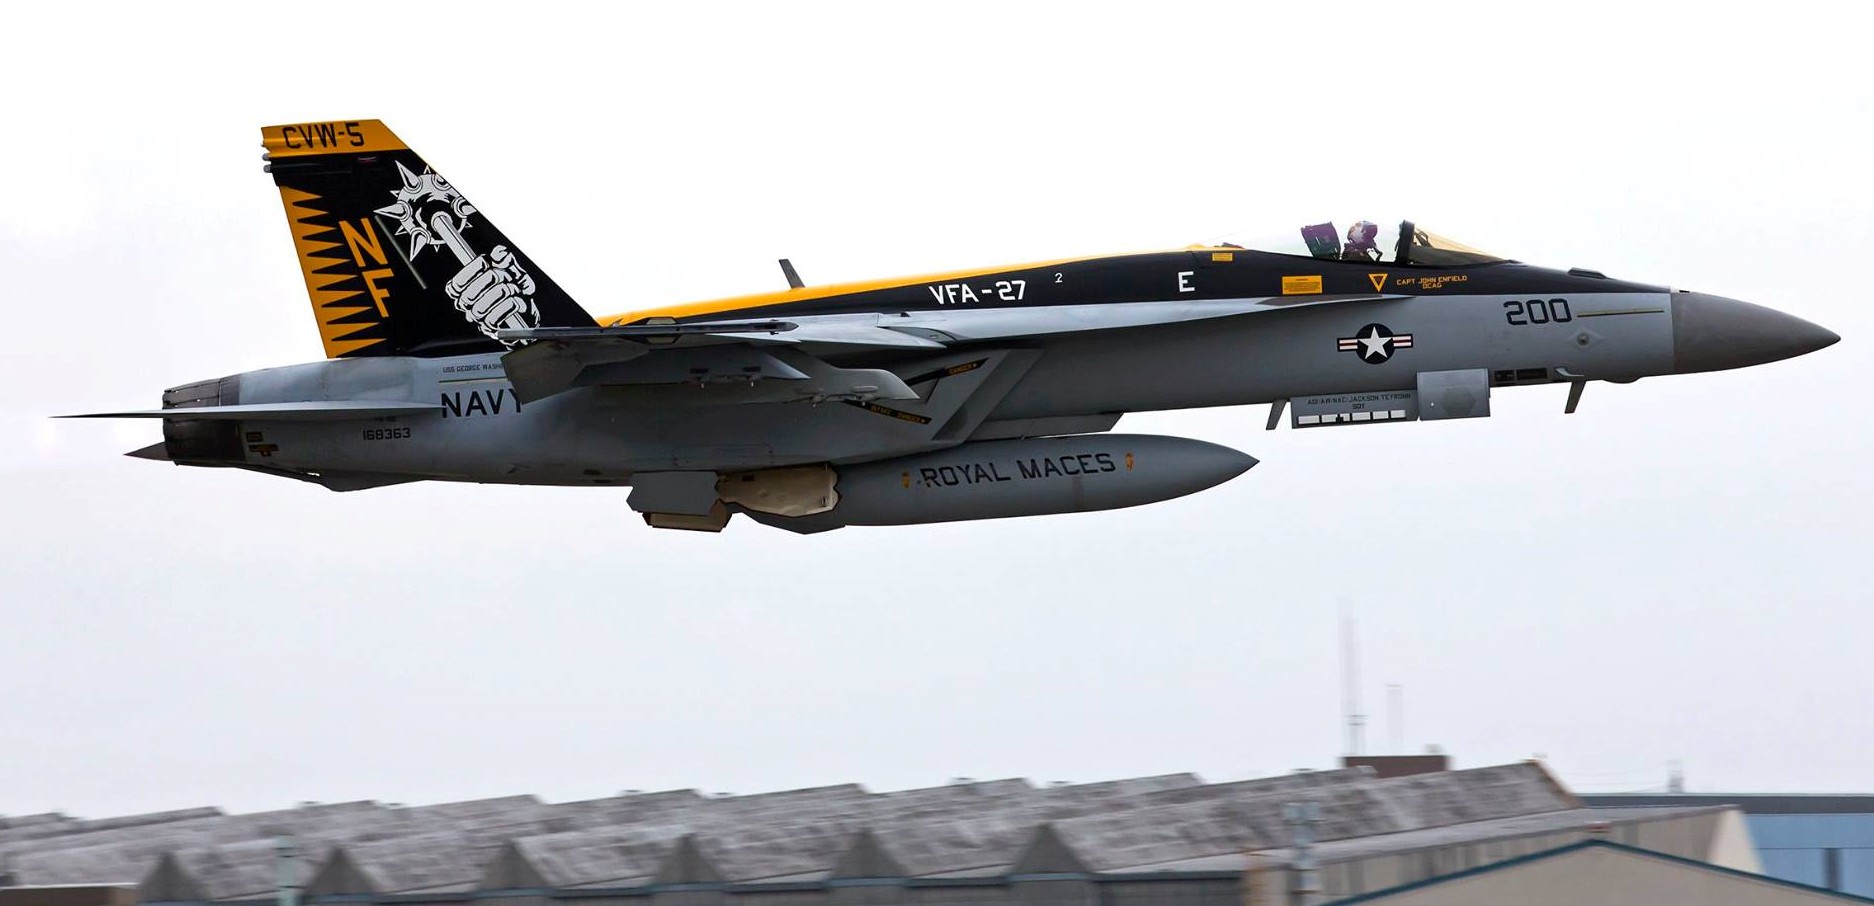 vfa-27 royal maces strike fighter squadron f/a-18e super hornet naf atsugi japan 199p